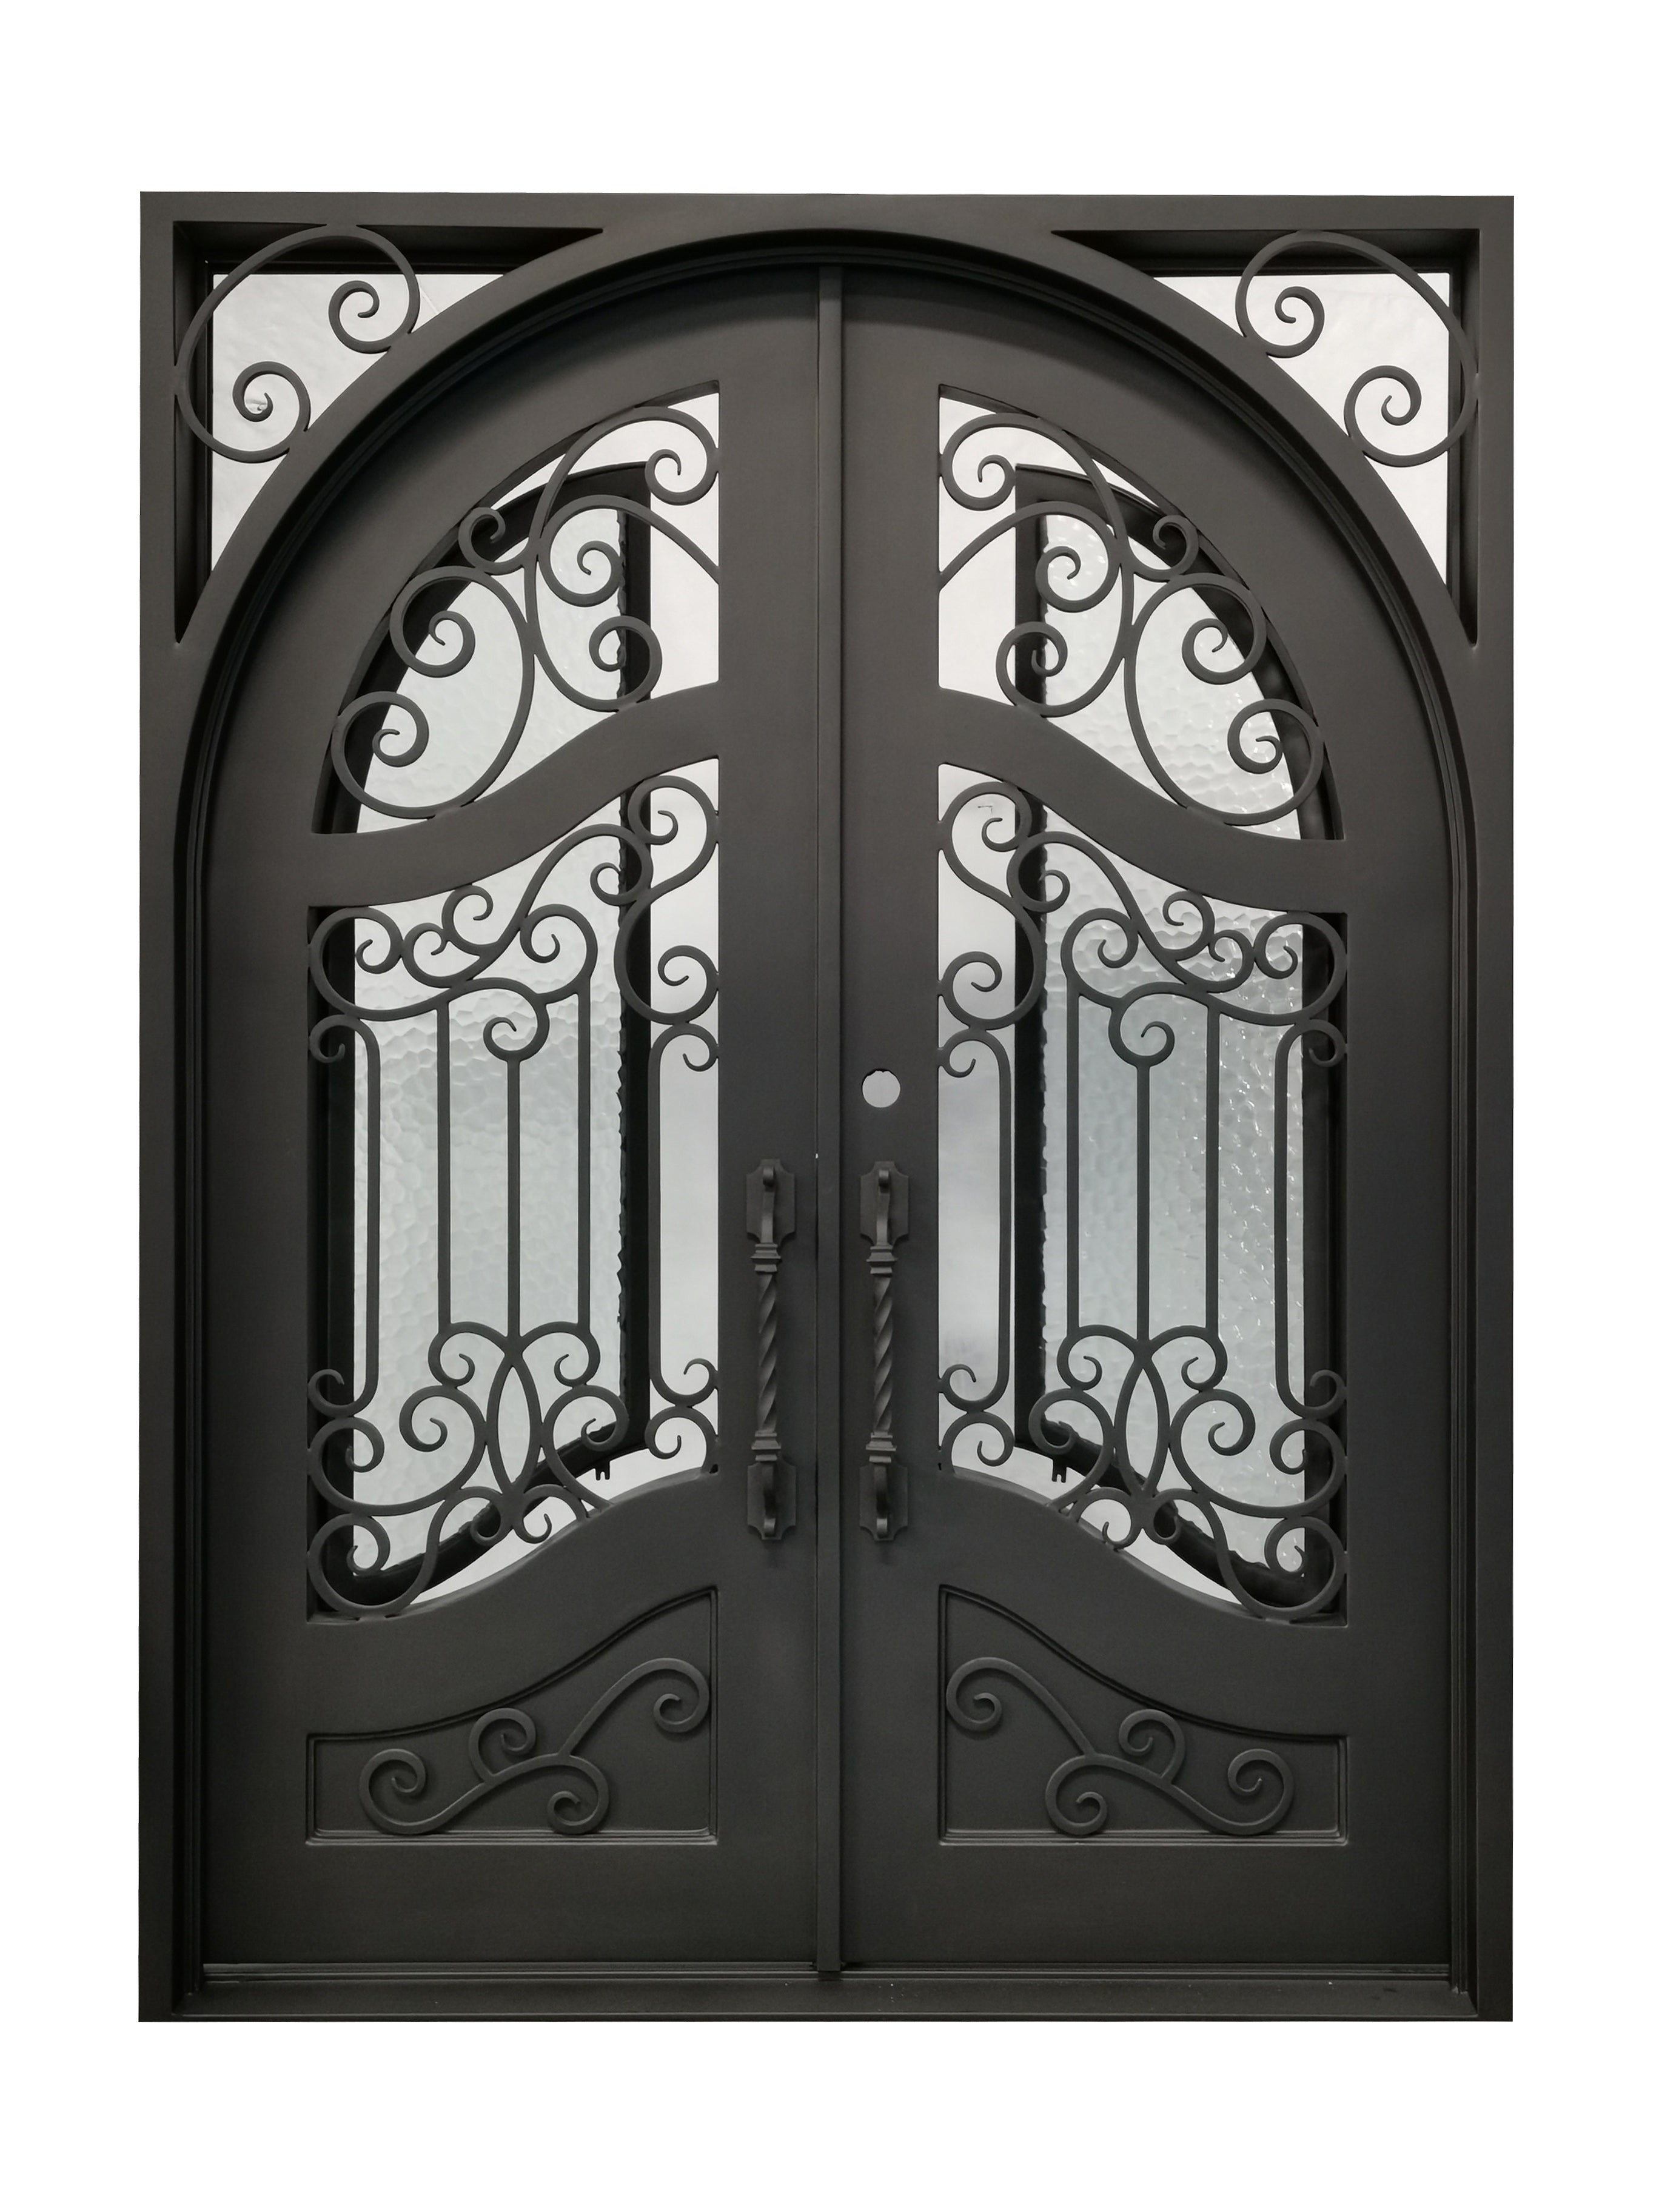 Calvert Model Double Front Entry Iron Door With Tempered Water Cube Glass Dark Bronze Finish